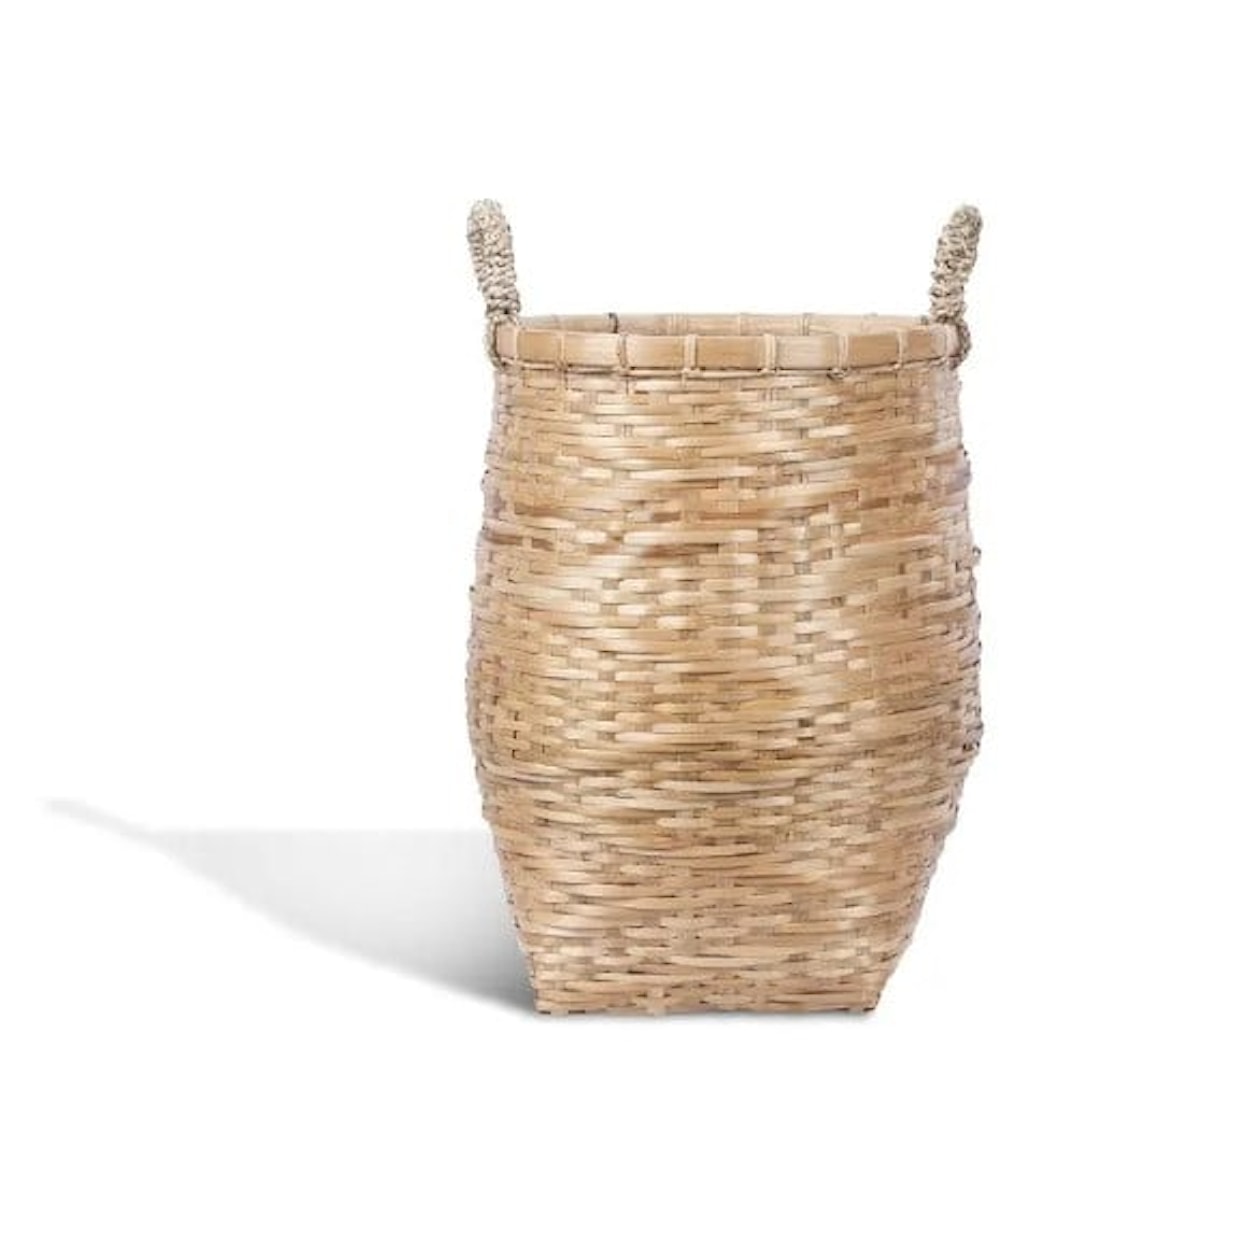 Ibolili Baskets and Sets BAMBOO BASKET S/2